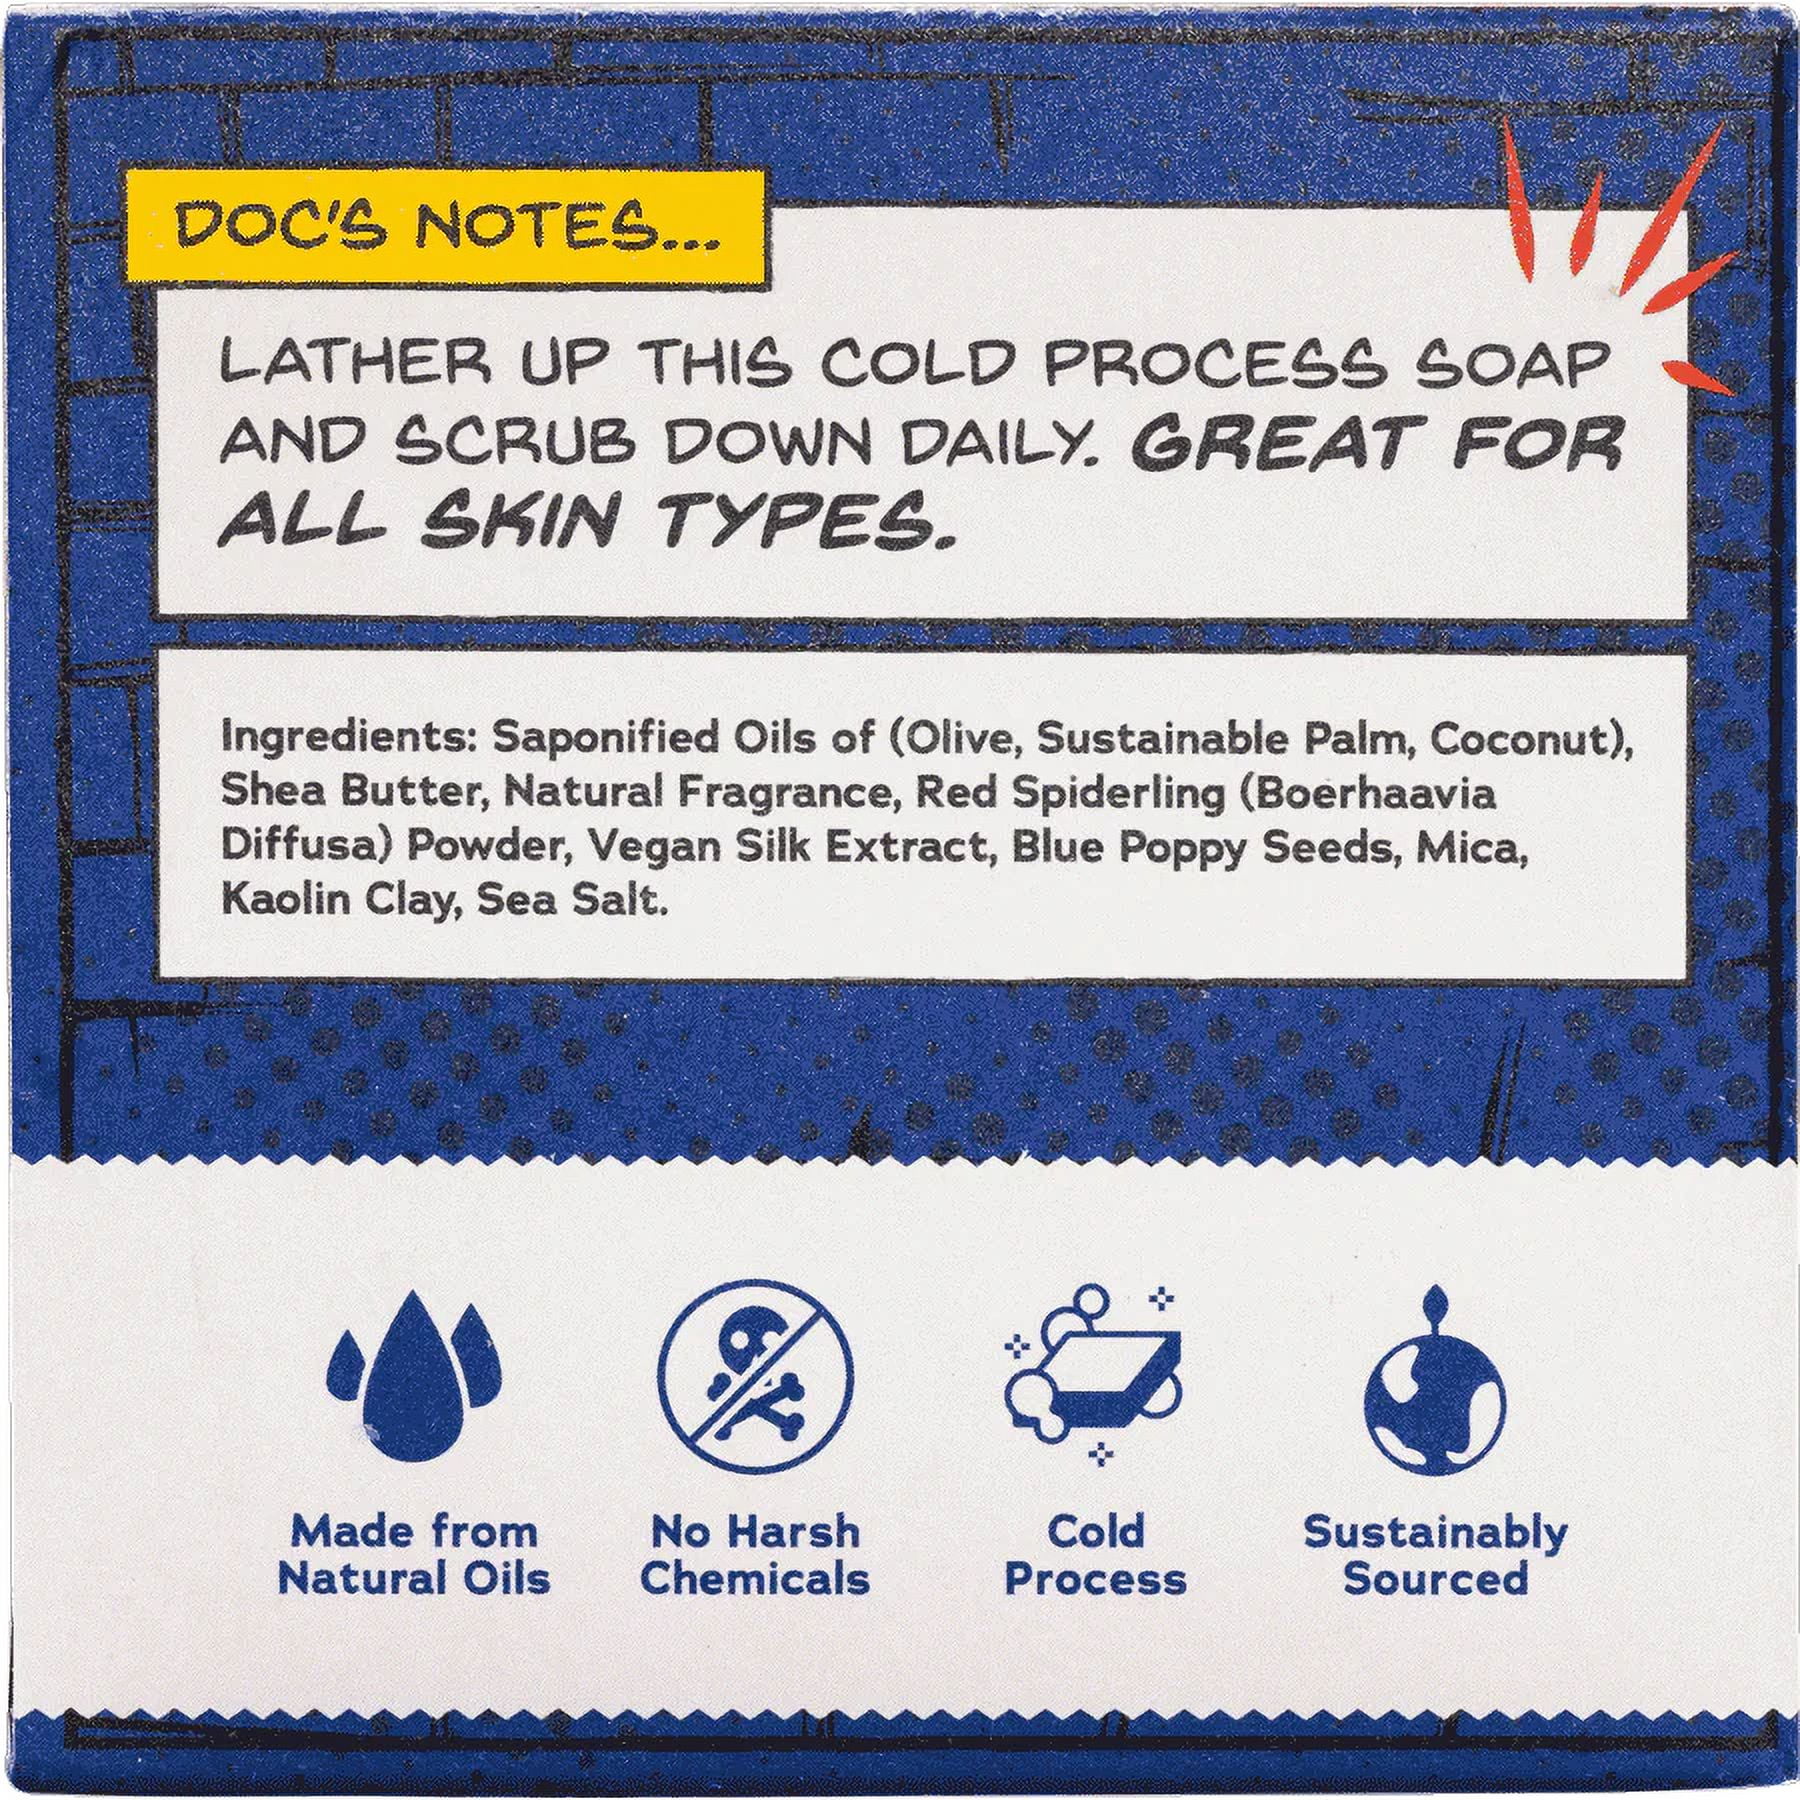 Dr. Squatch Men's Natural Bar Soap for All Skin Types, Spidey Suds, 5 oz